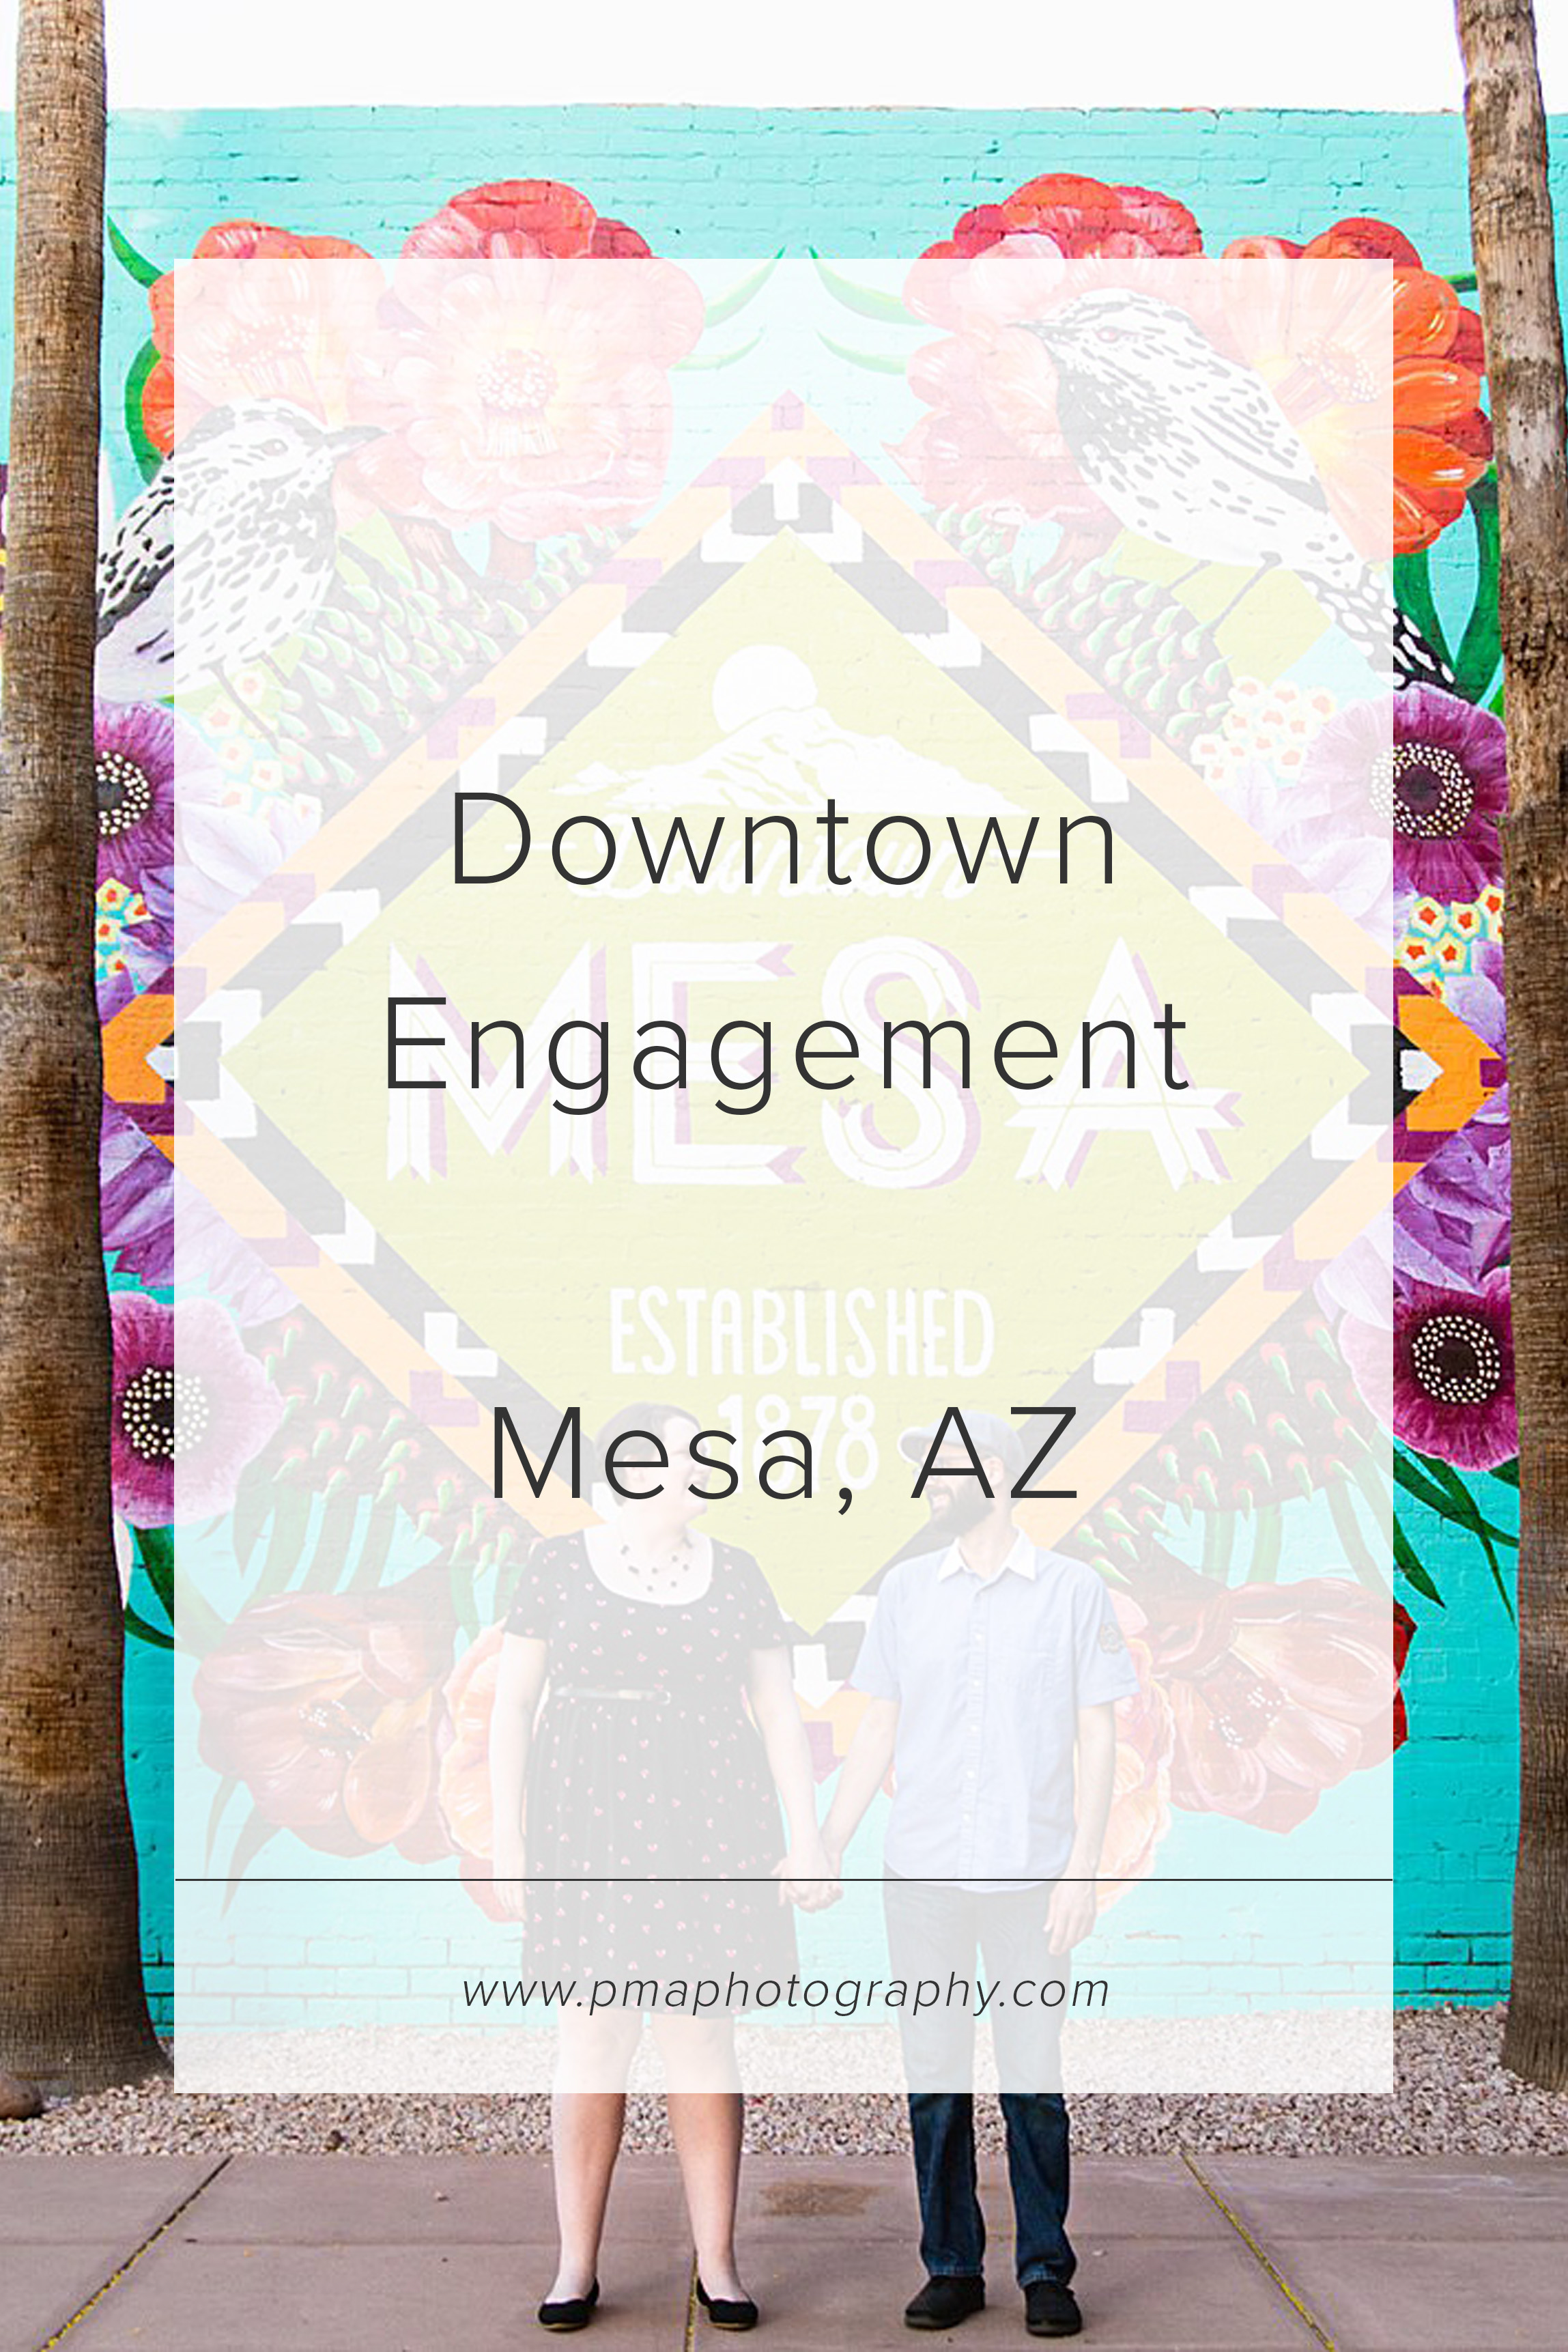 Downtown Mesa engagement session by Phoenix engagement photographer PMA Photography.